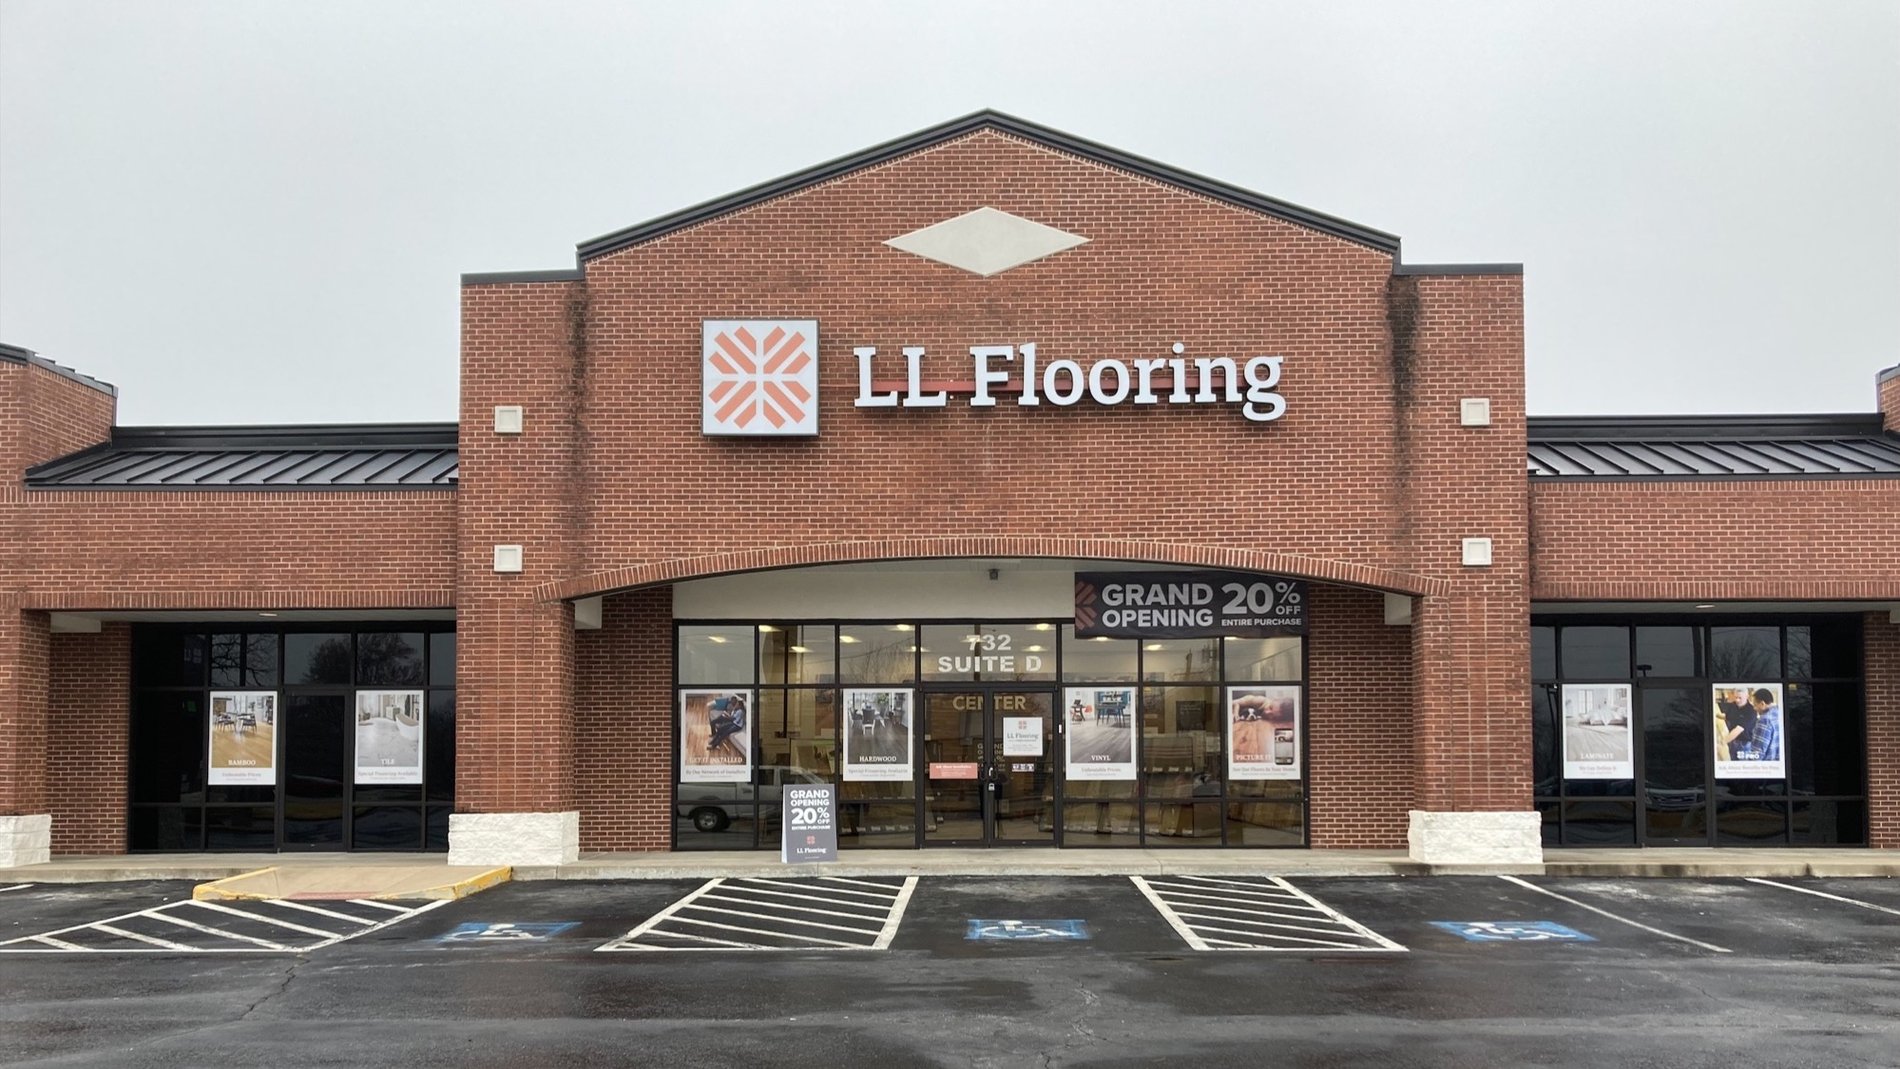 LL Flooring #1459 Joplin | 732 S. Range Line Rd. | Storefront